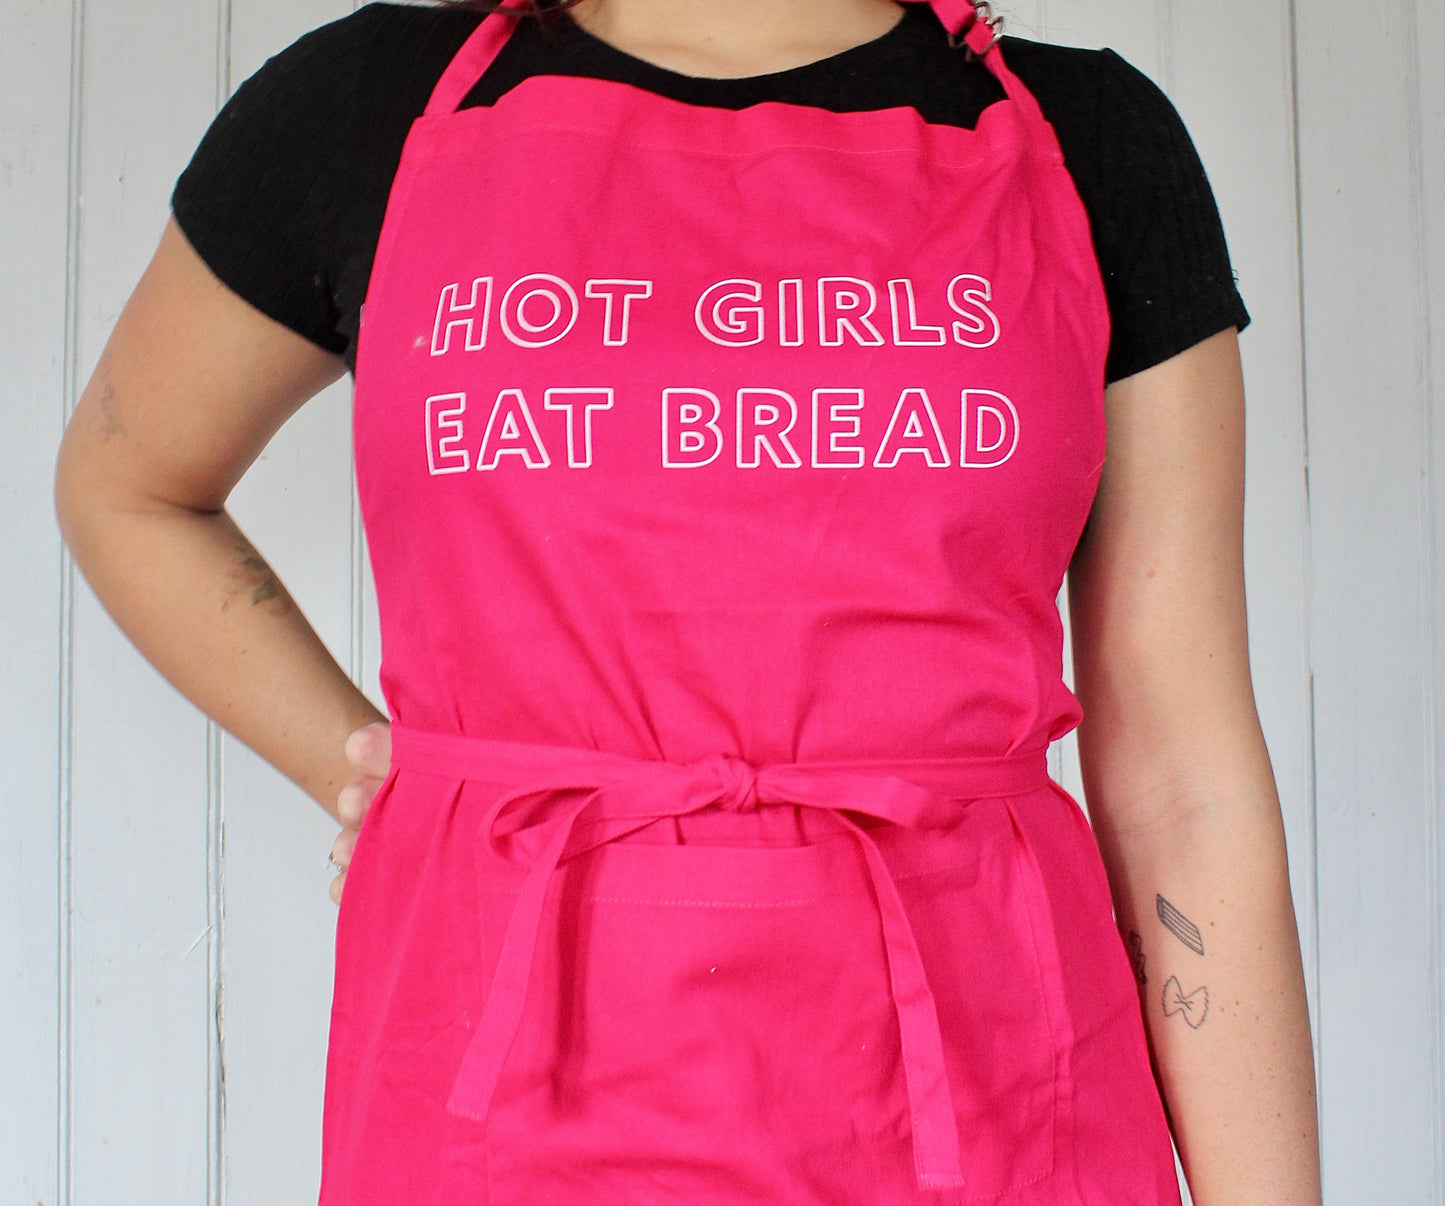 Hot Girls Eat Bread Apron